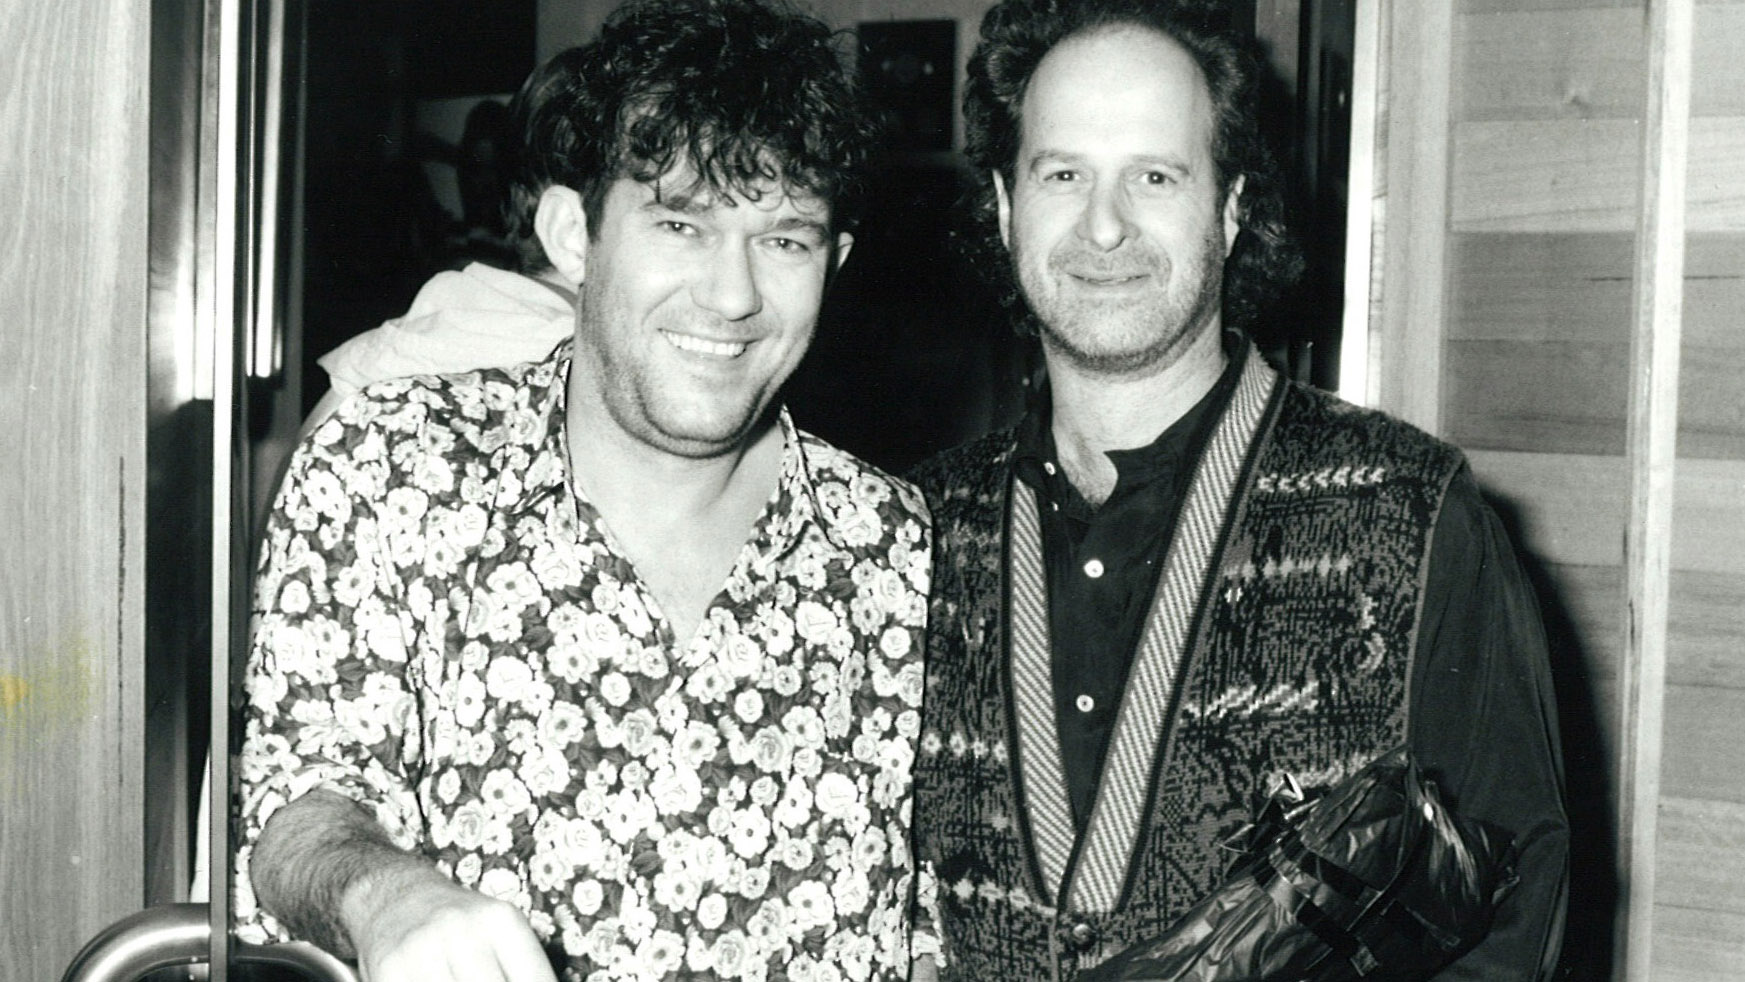 Jimmy Barnes and Michael Gudinski in the 1990's. 